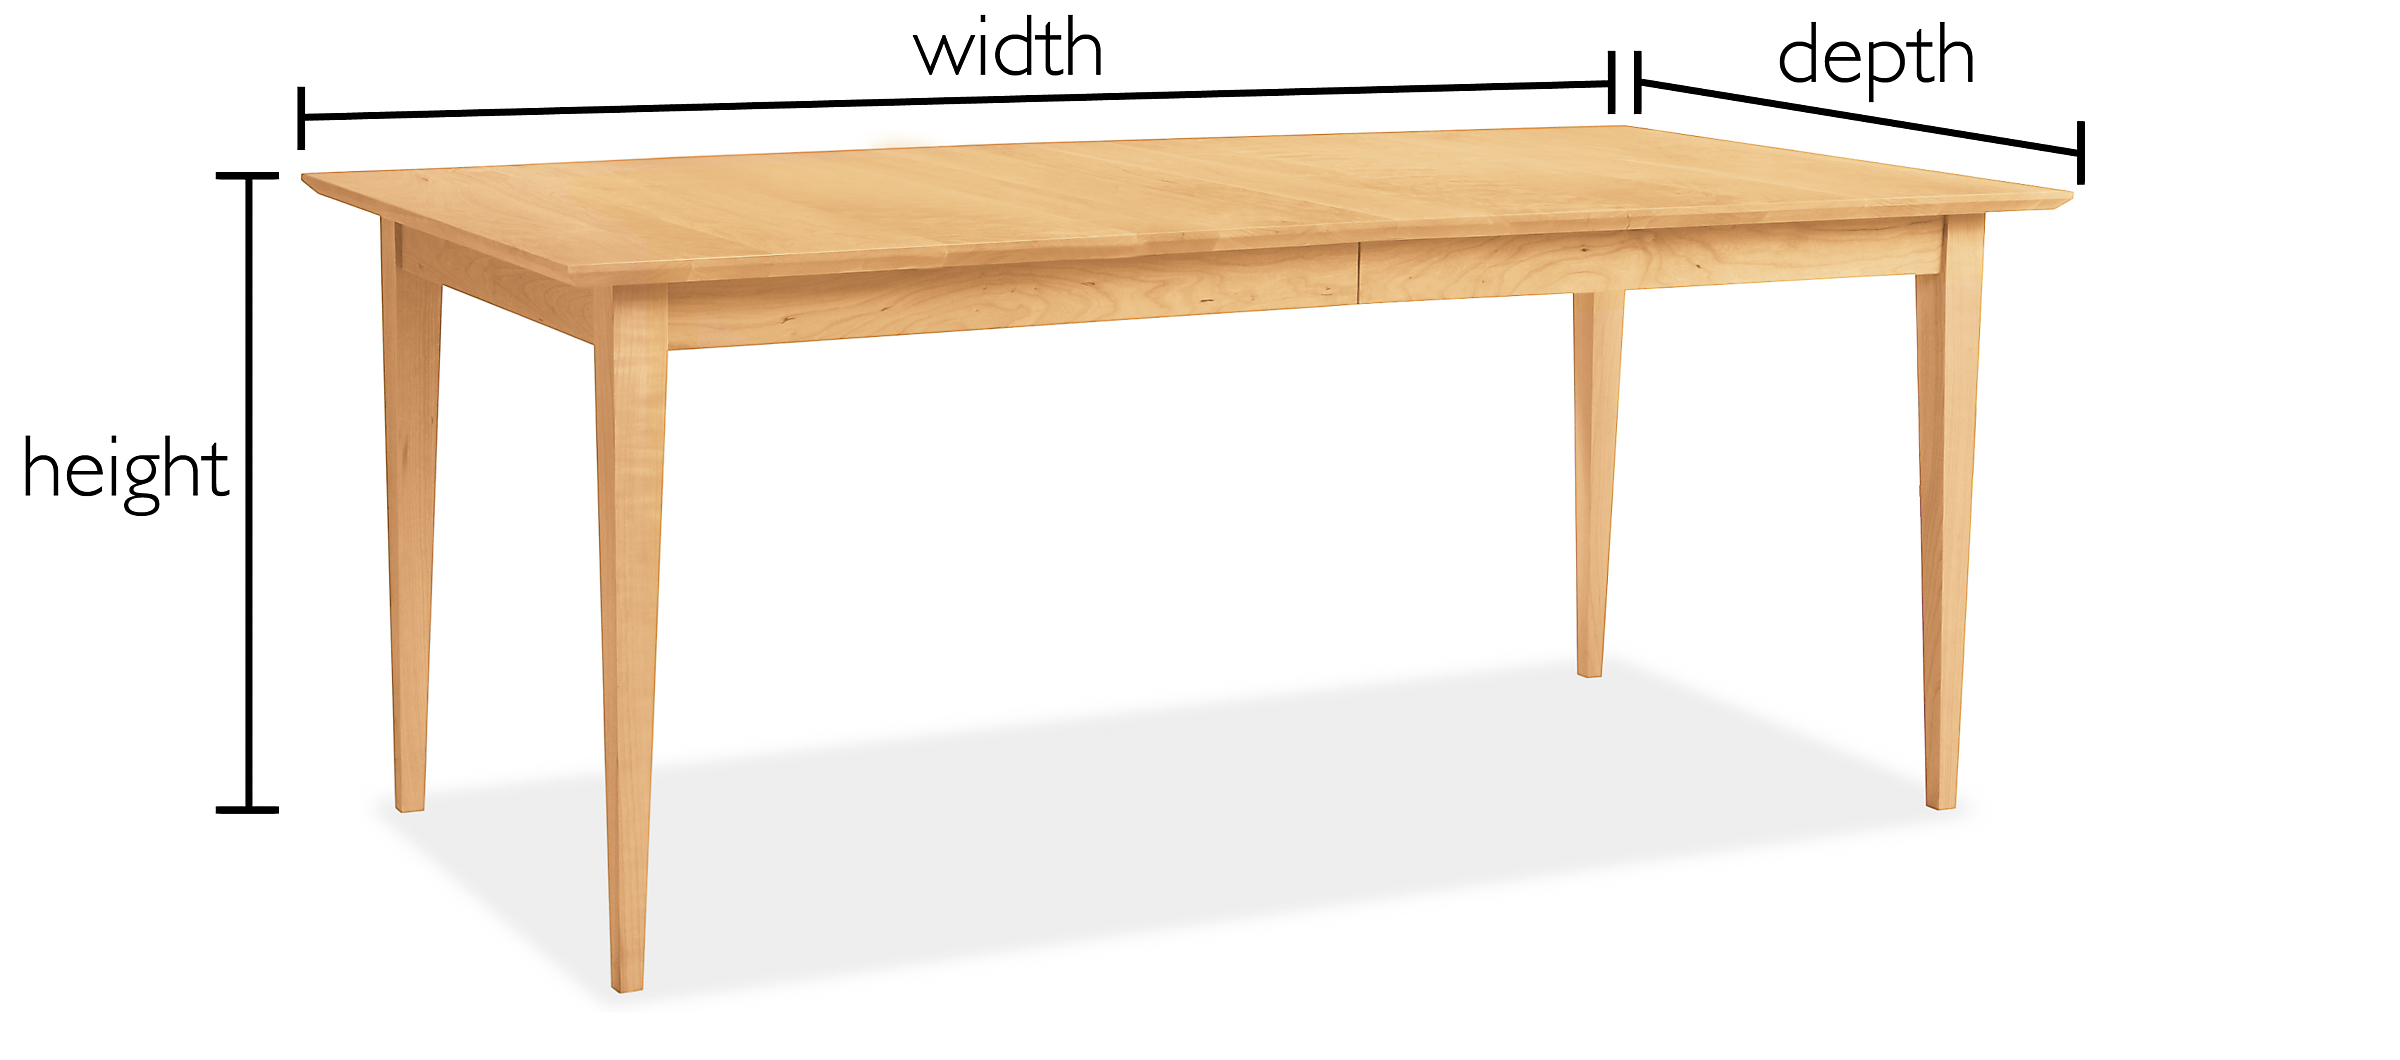 Adams Custom Extension Table